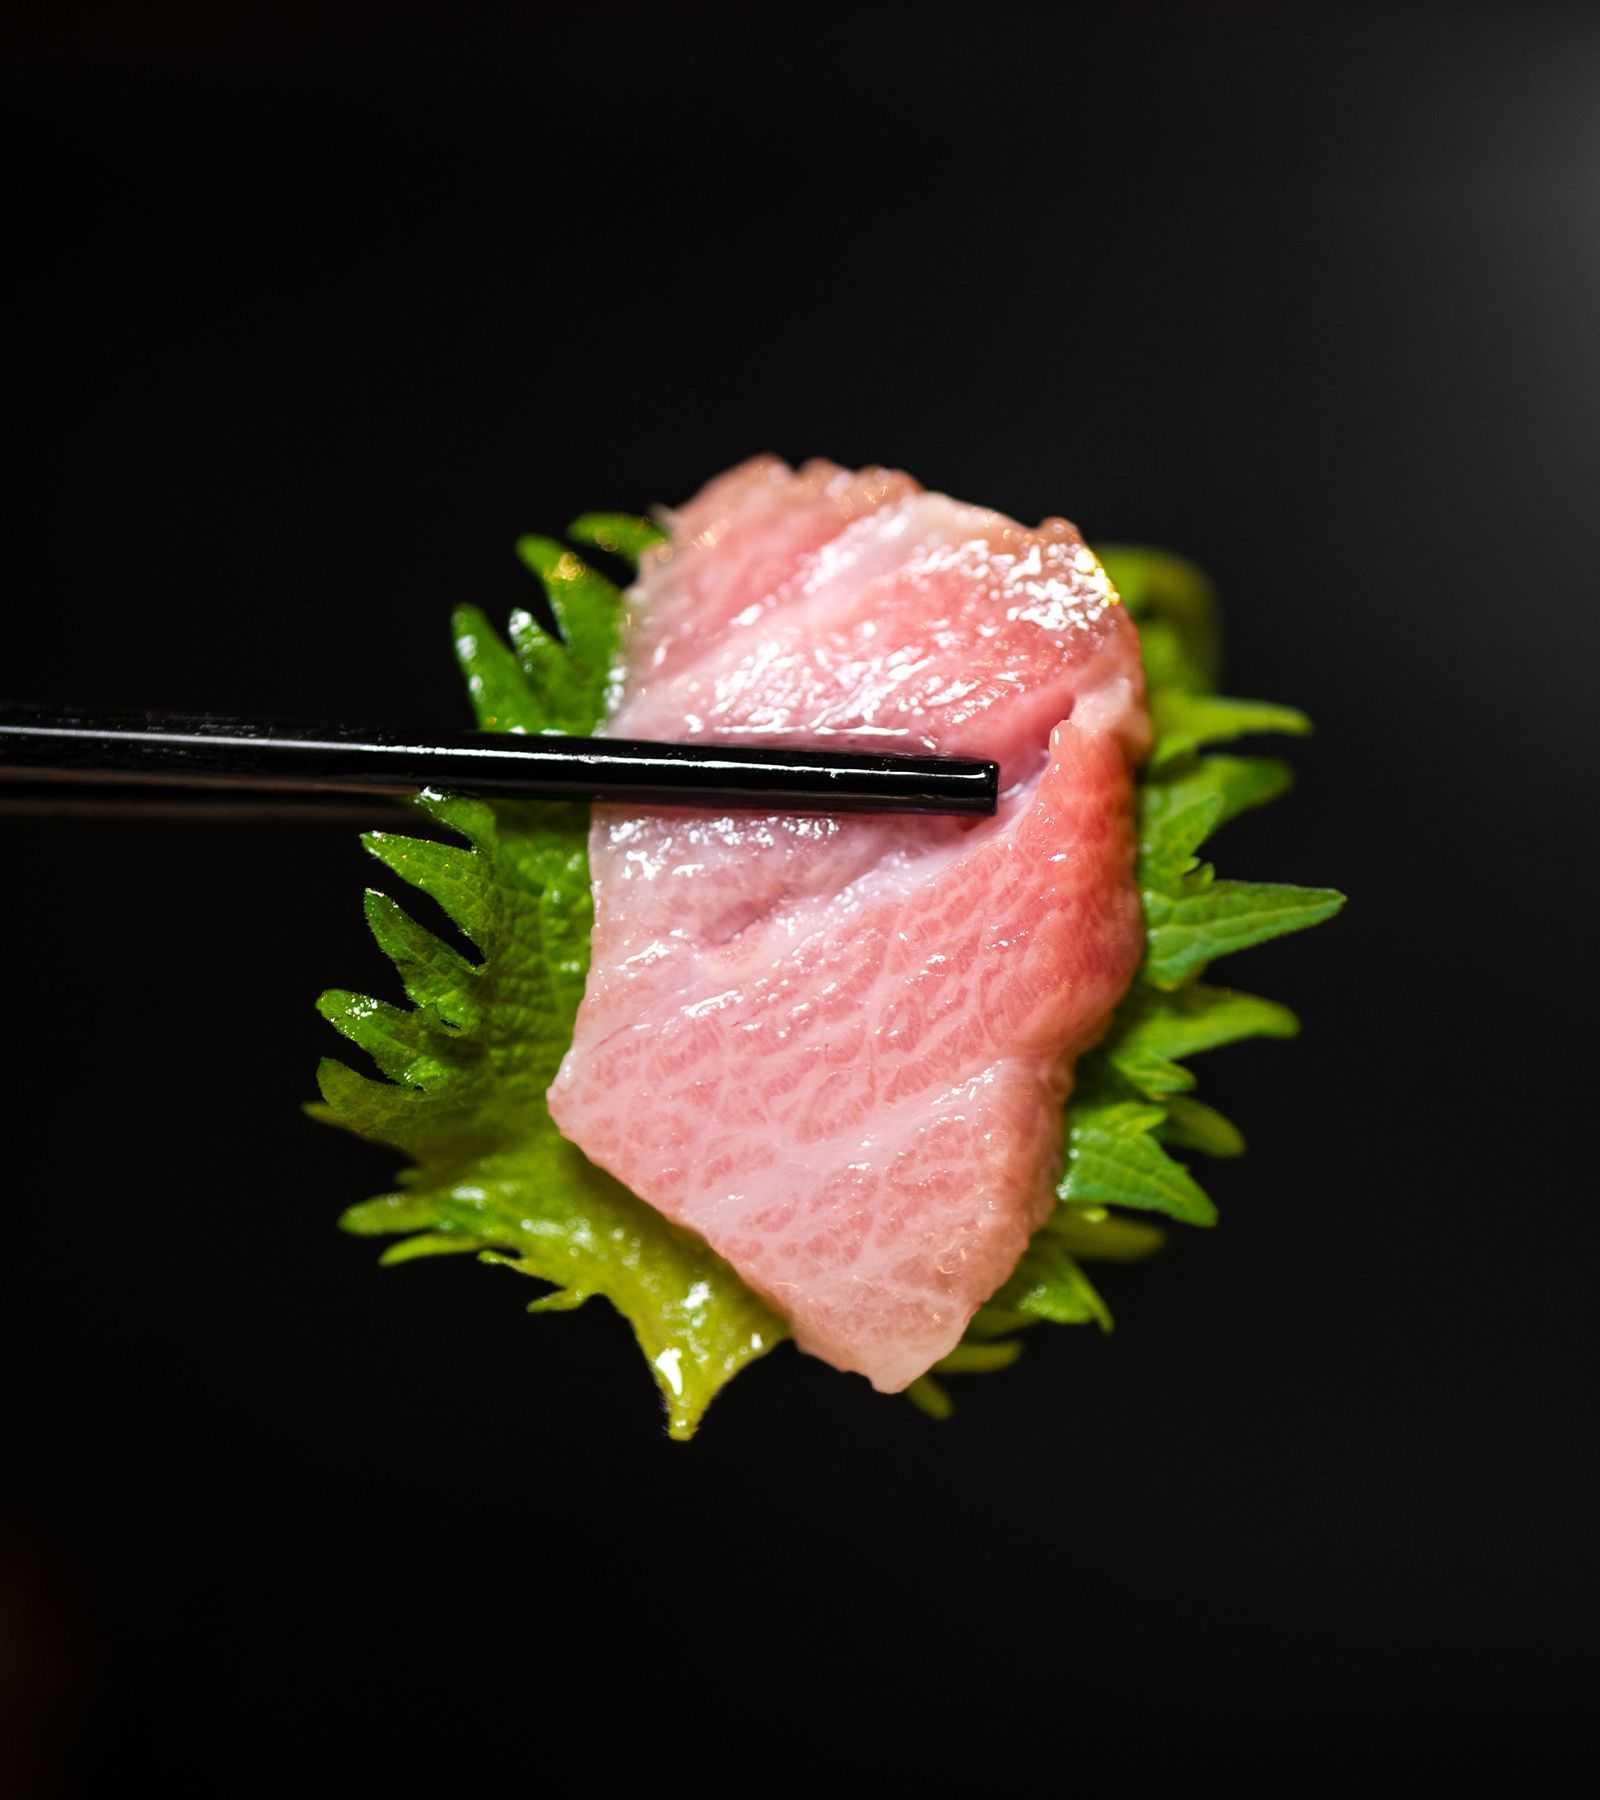 Beautiful cut of sashimi being held by chopsticks